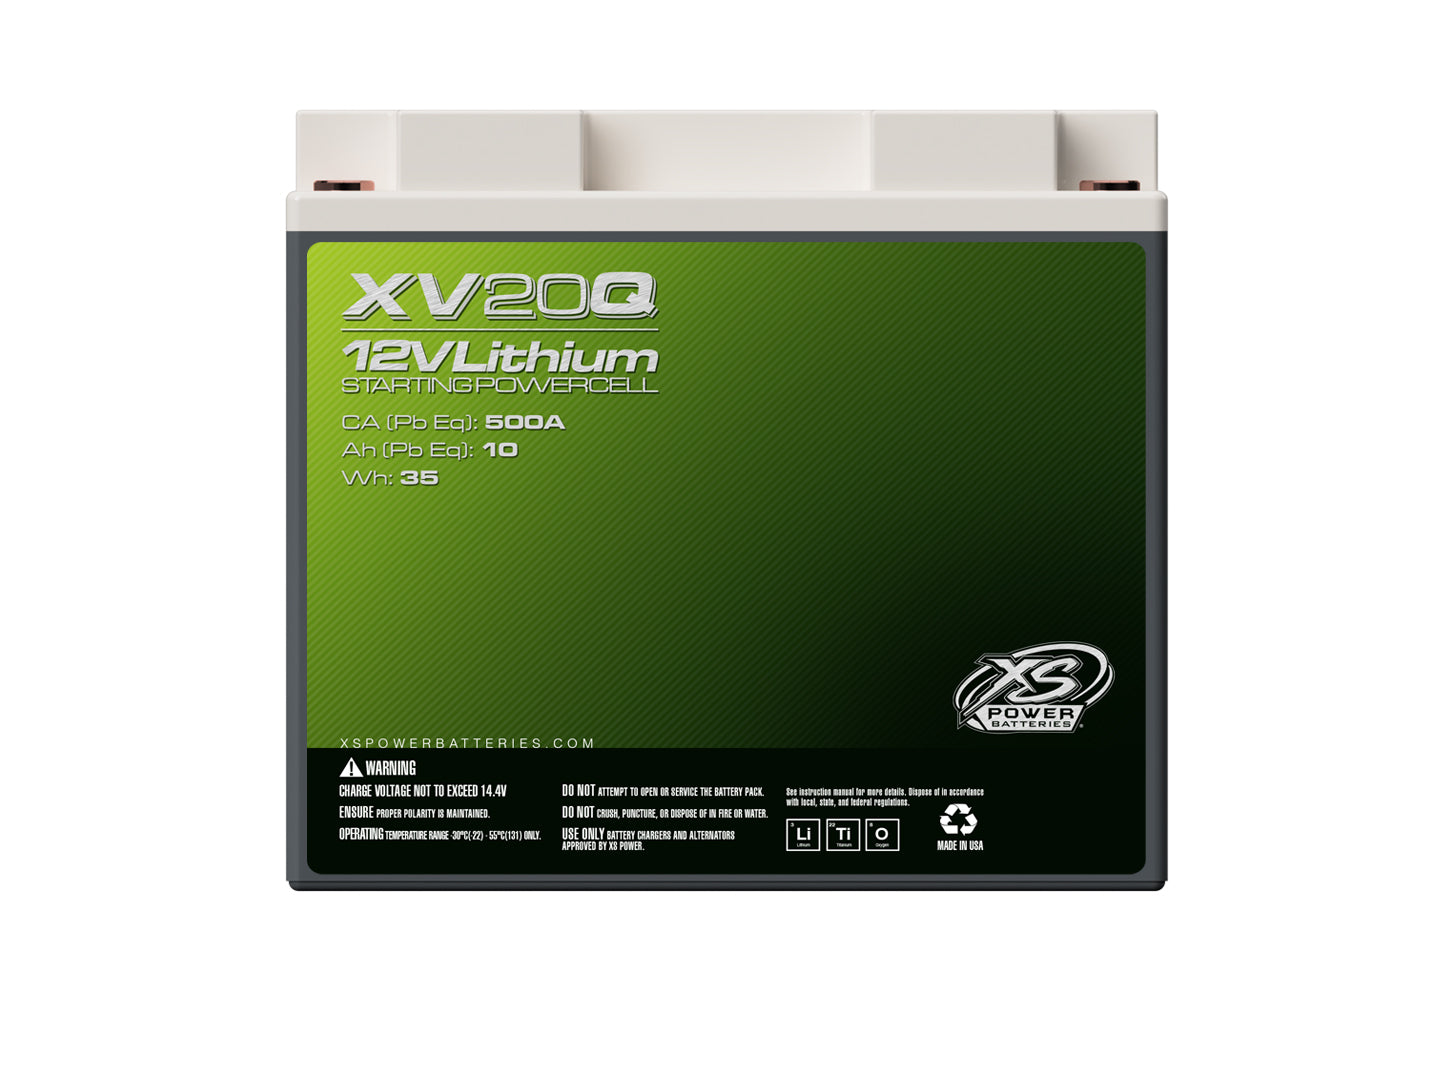 XV20Q XS Power 12VDC Group 20L Lithium LTO Underhood-Safe Battery 750W 35Wh